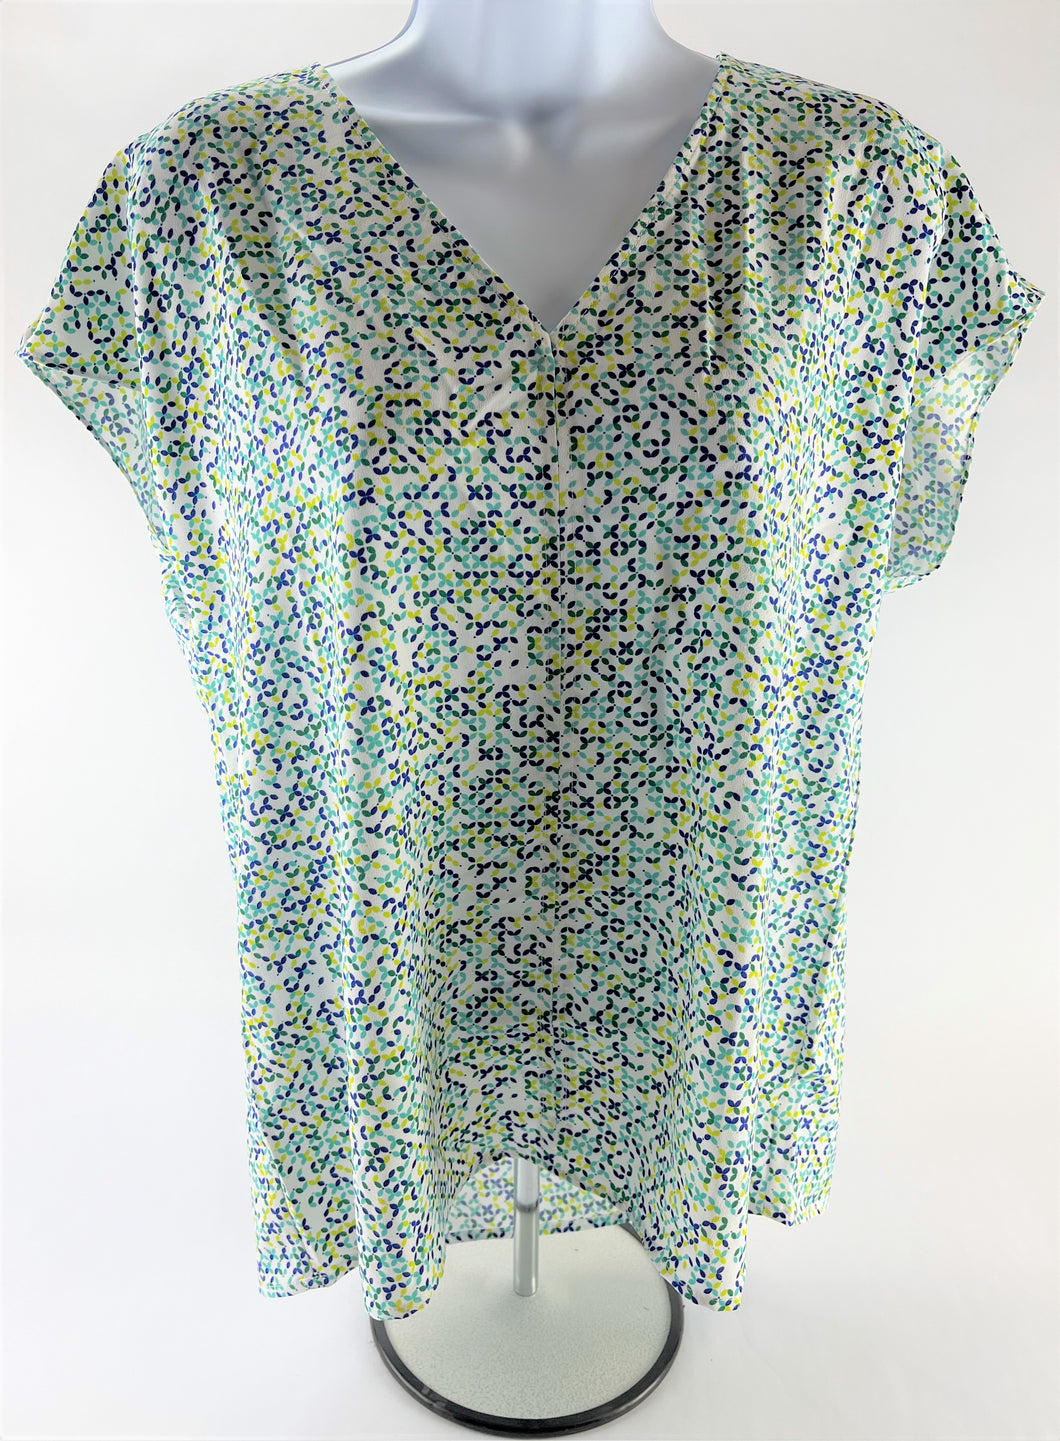 Hilary Radley V Neck Top Multi Check Combo Blouse Lightweight Fabric Shirt